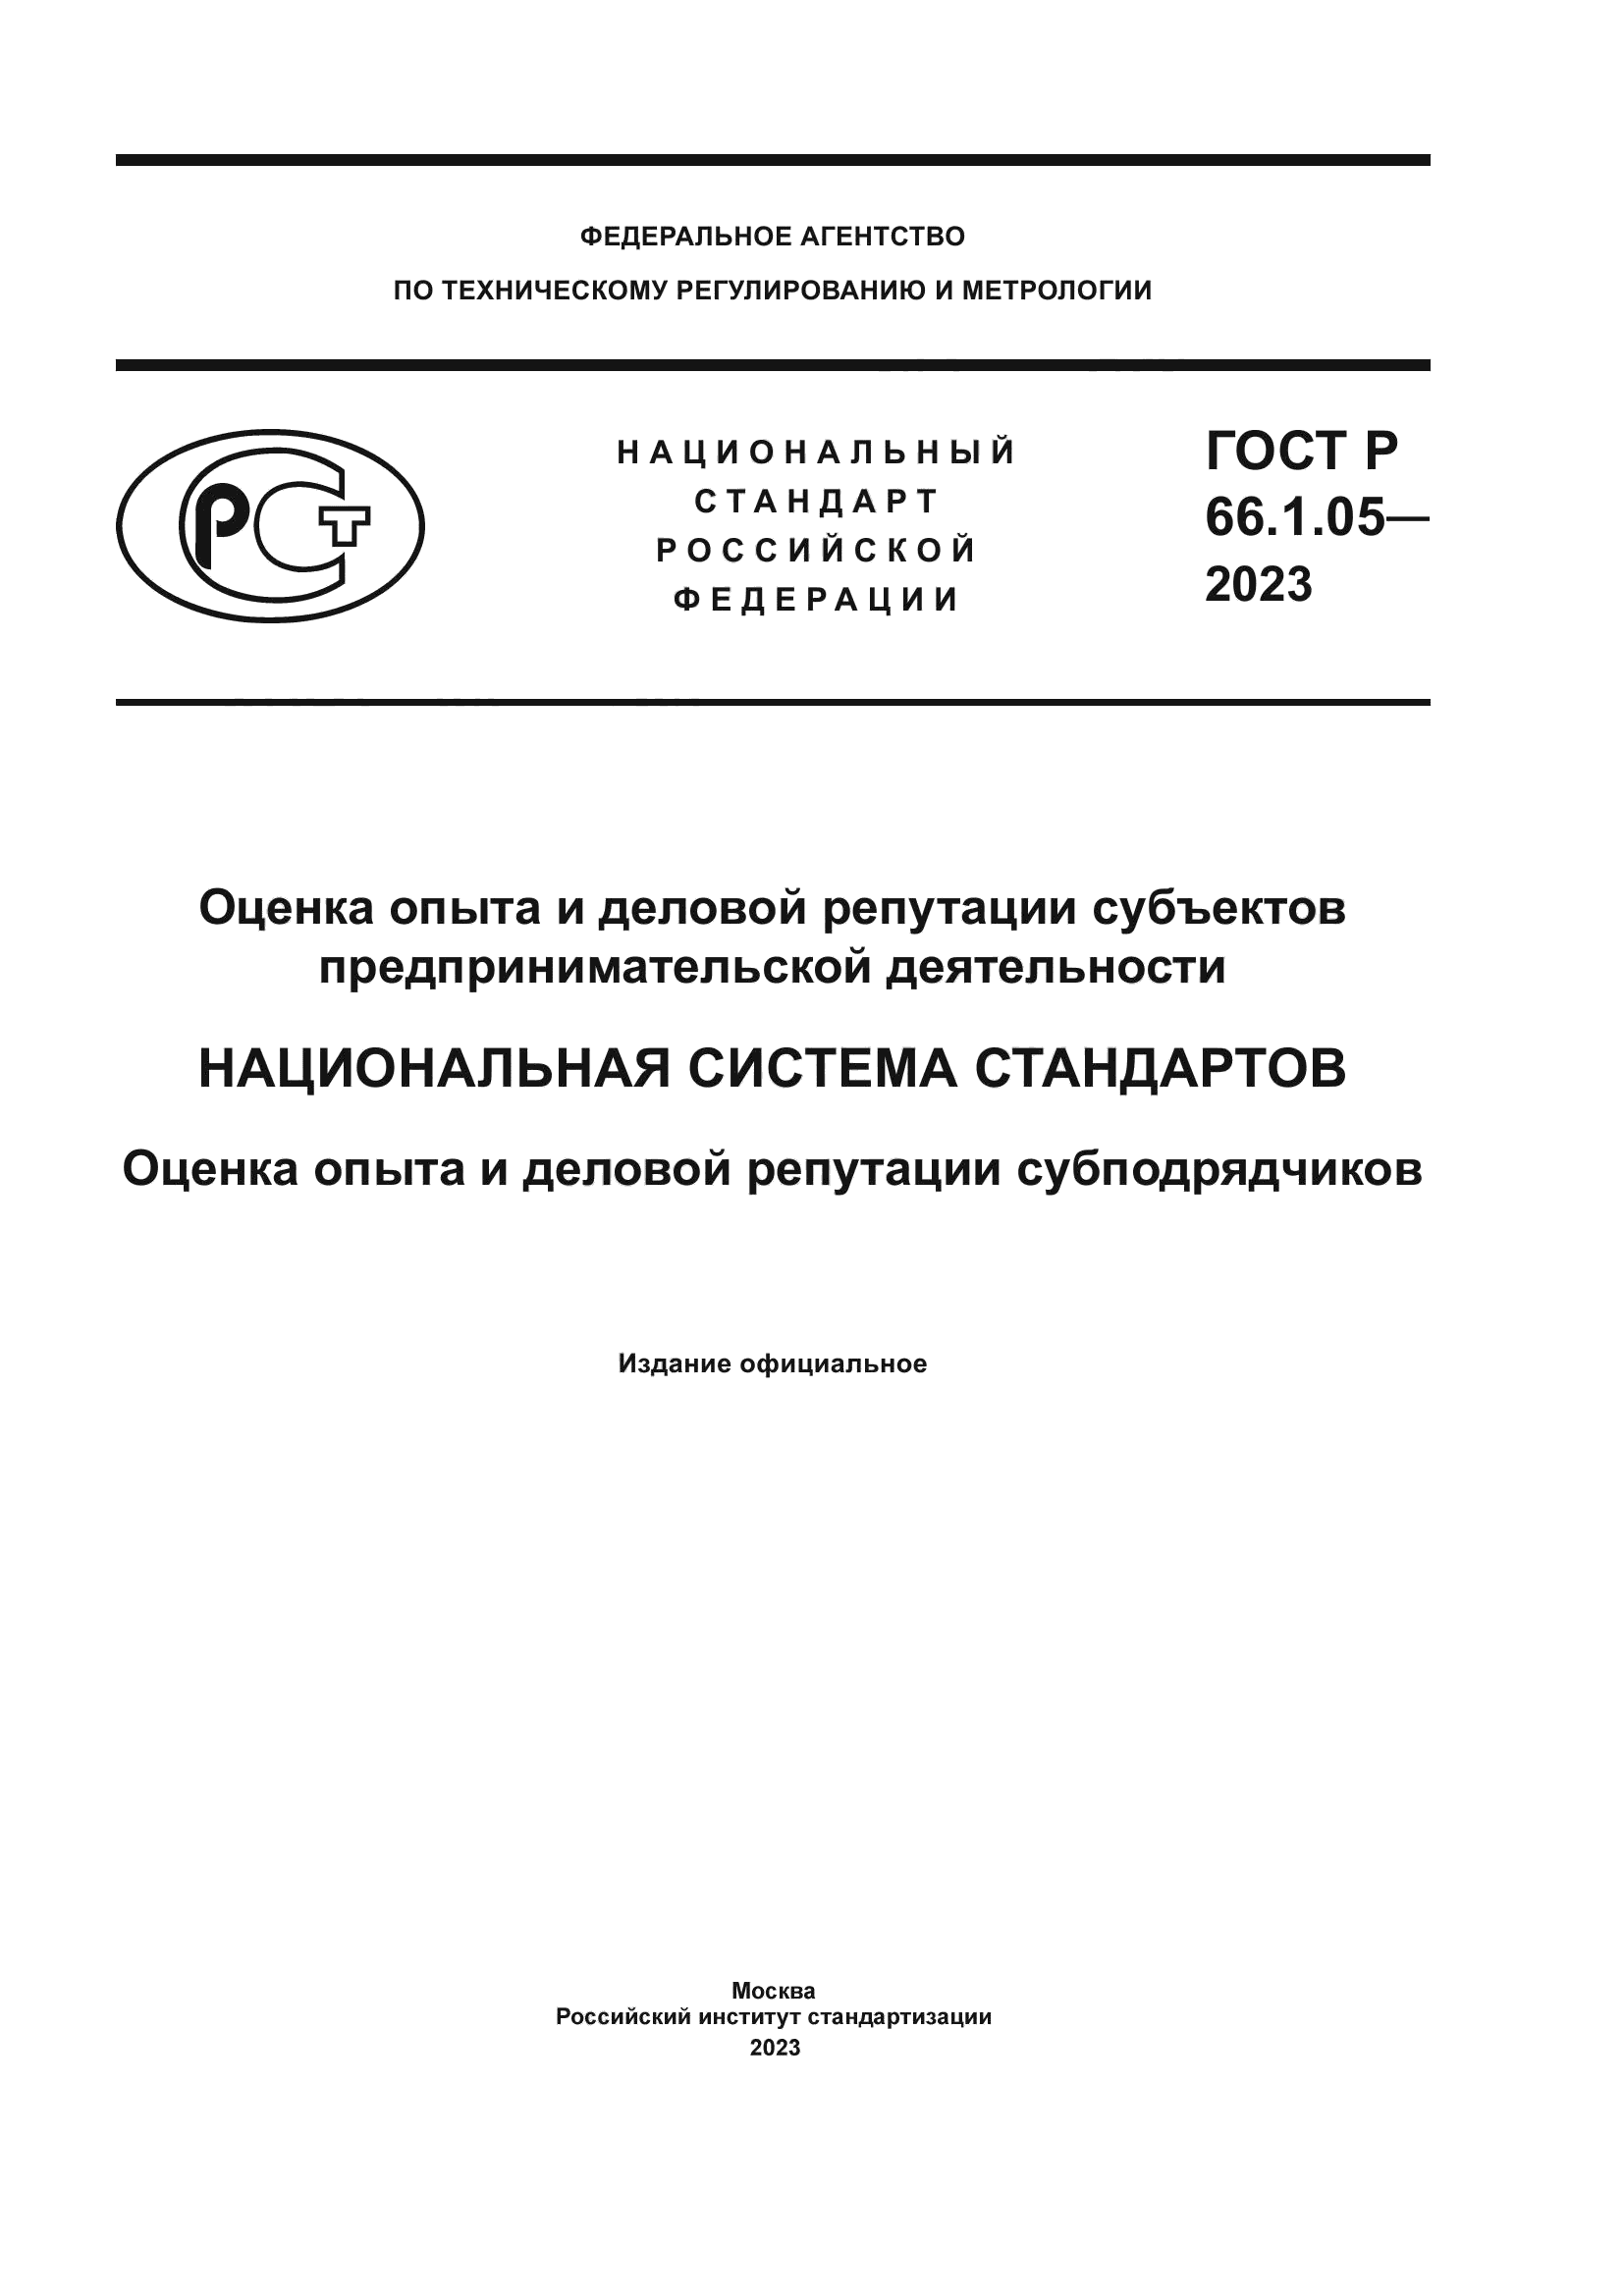 ГОСТ Р 66.1.05-2023